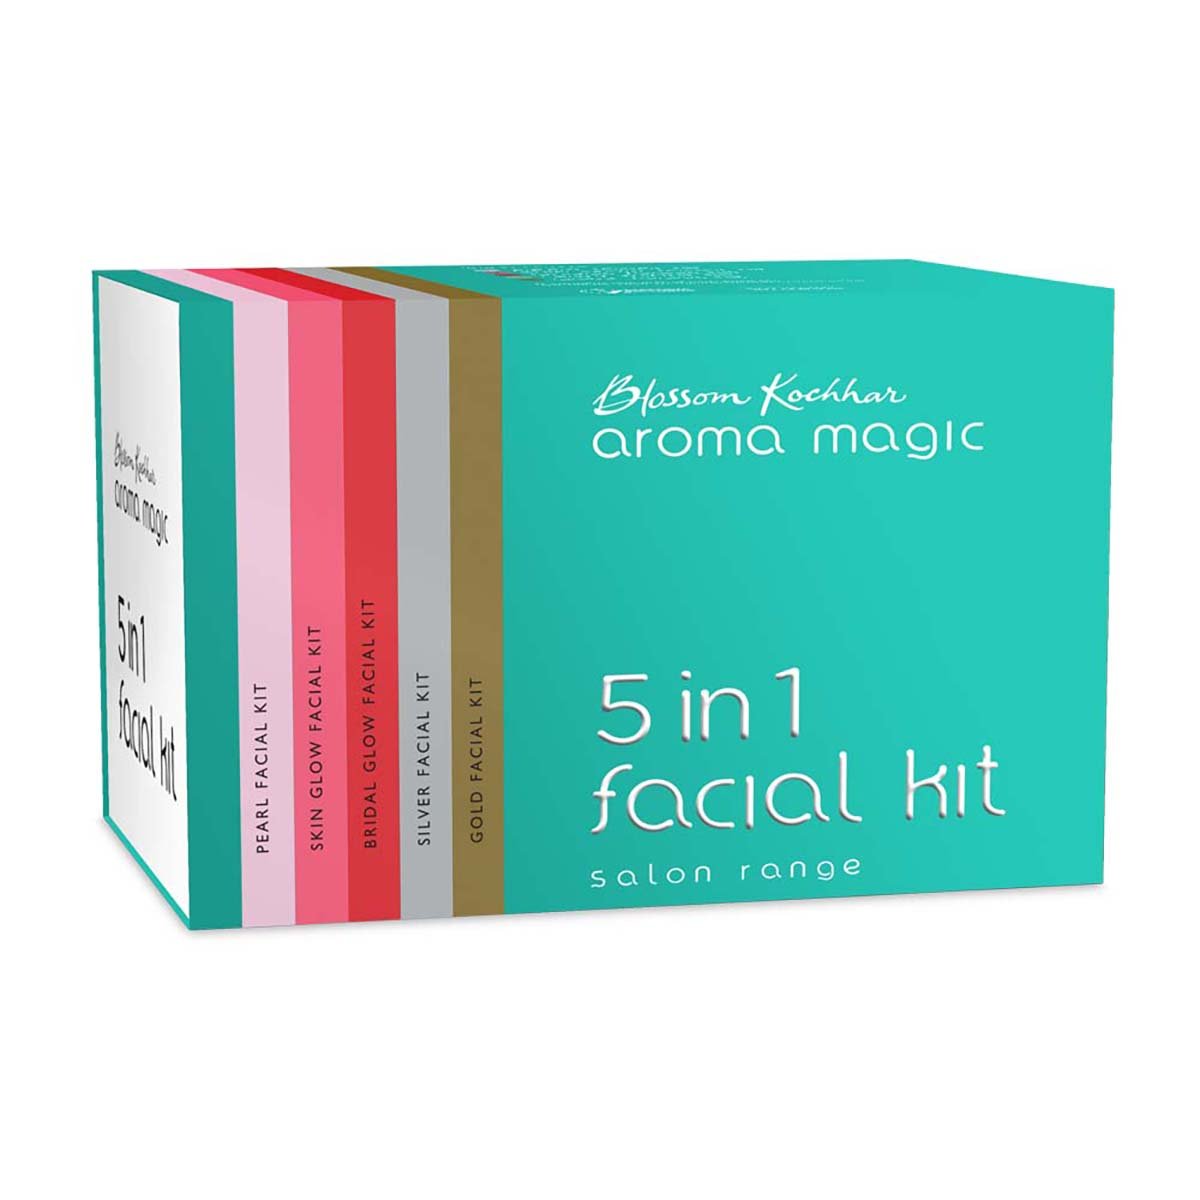 Aroma Magic 5 in 1 Facial Kit Salon Range - Niram